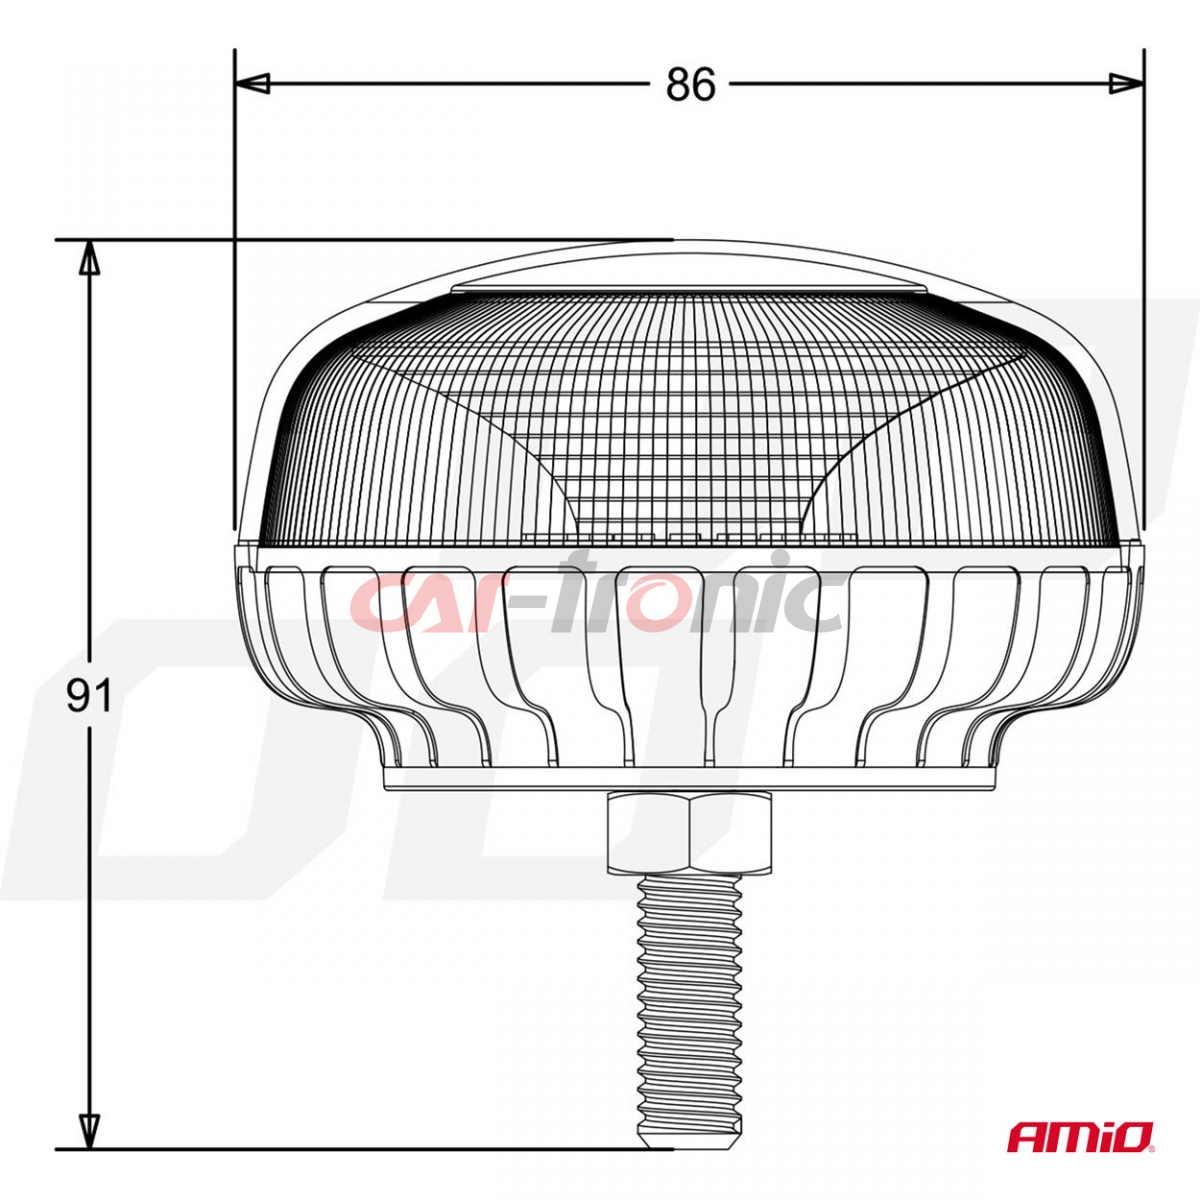 Lampa ostrzegawcza mini kogut 18 LED śruba R65 R10 12-24V W21sb AMIO-02923